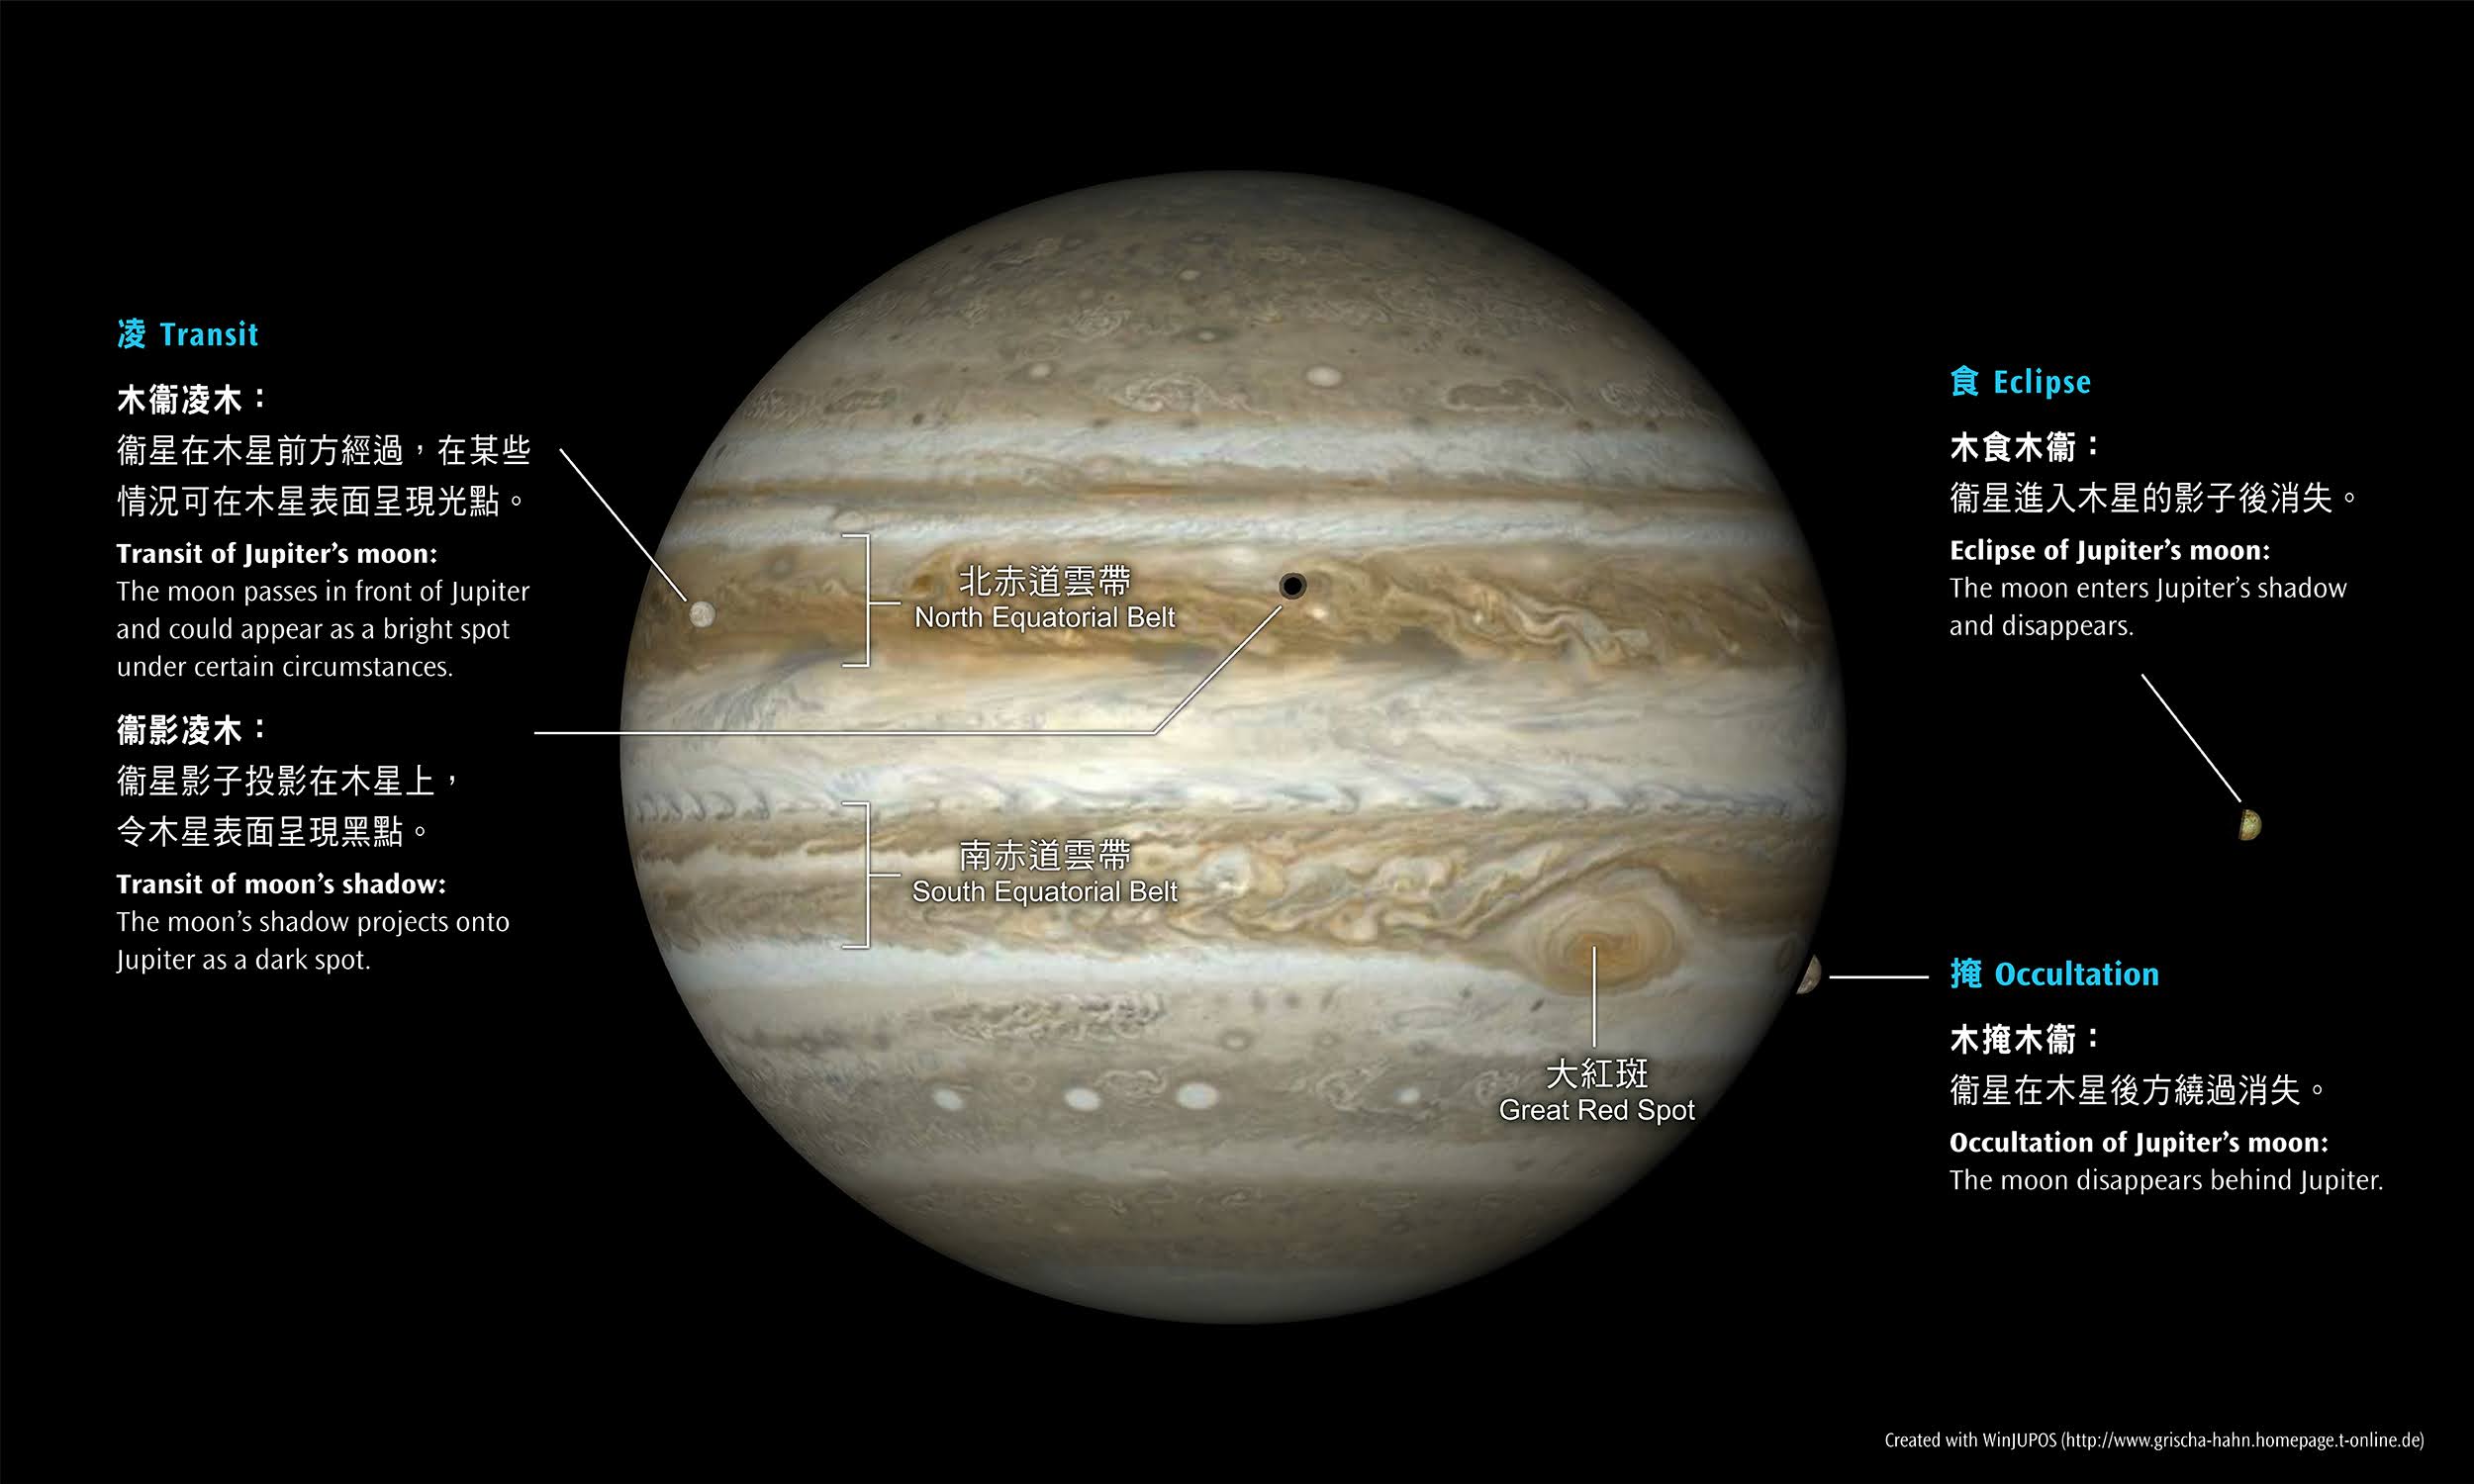 Serial Phenomena of Jupiter's Moons